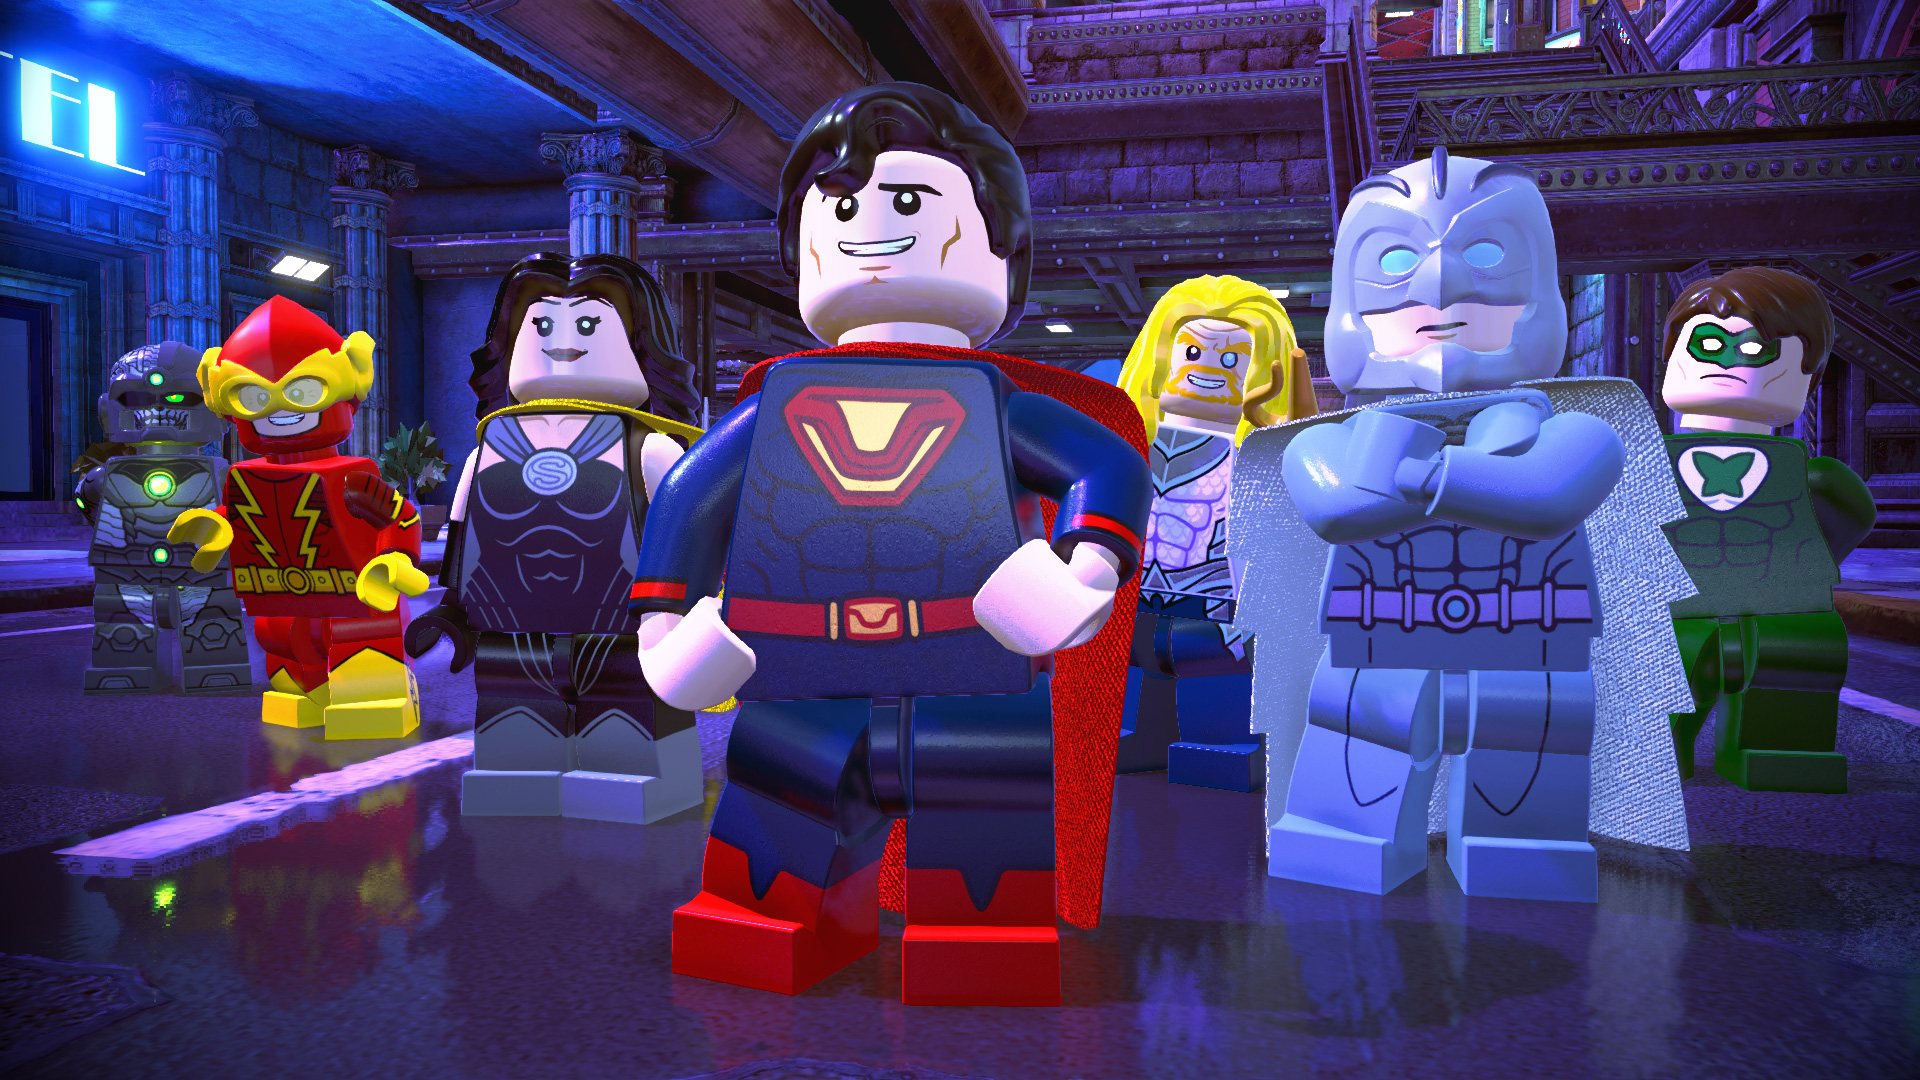 LEGO DC Super-Villains - Season Pass DLC US XBOX CD Key